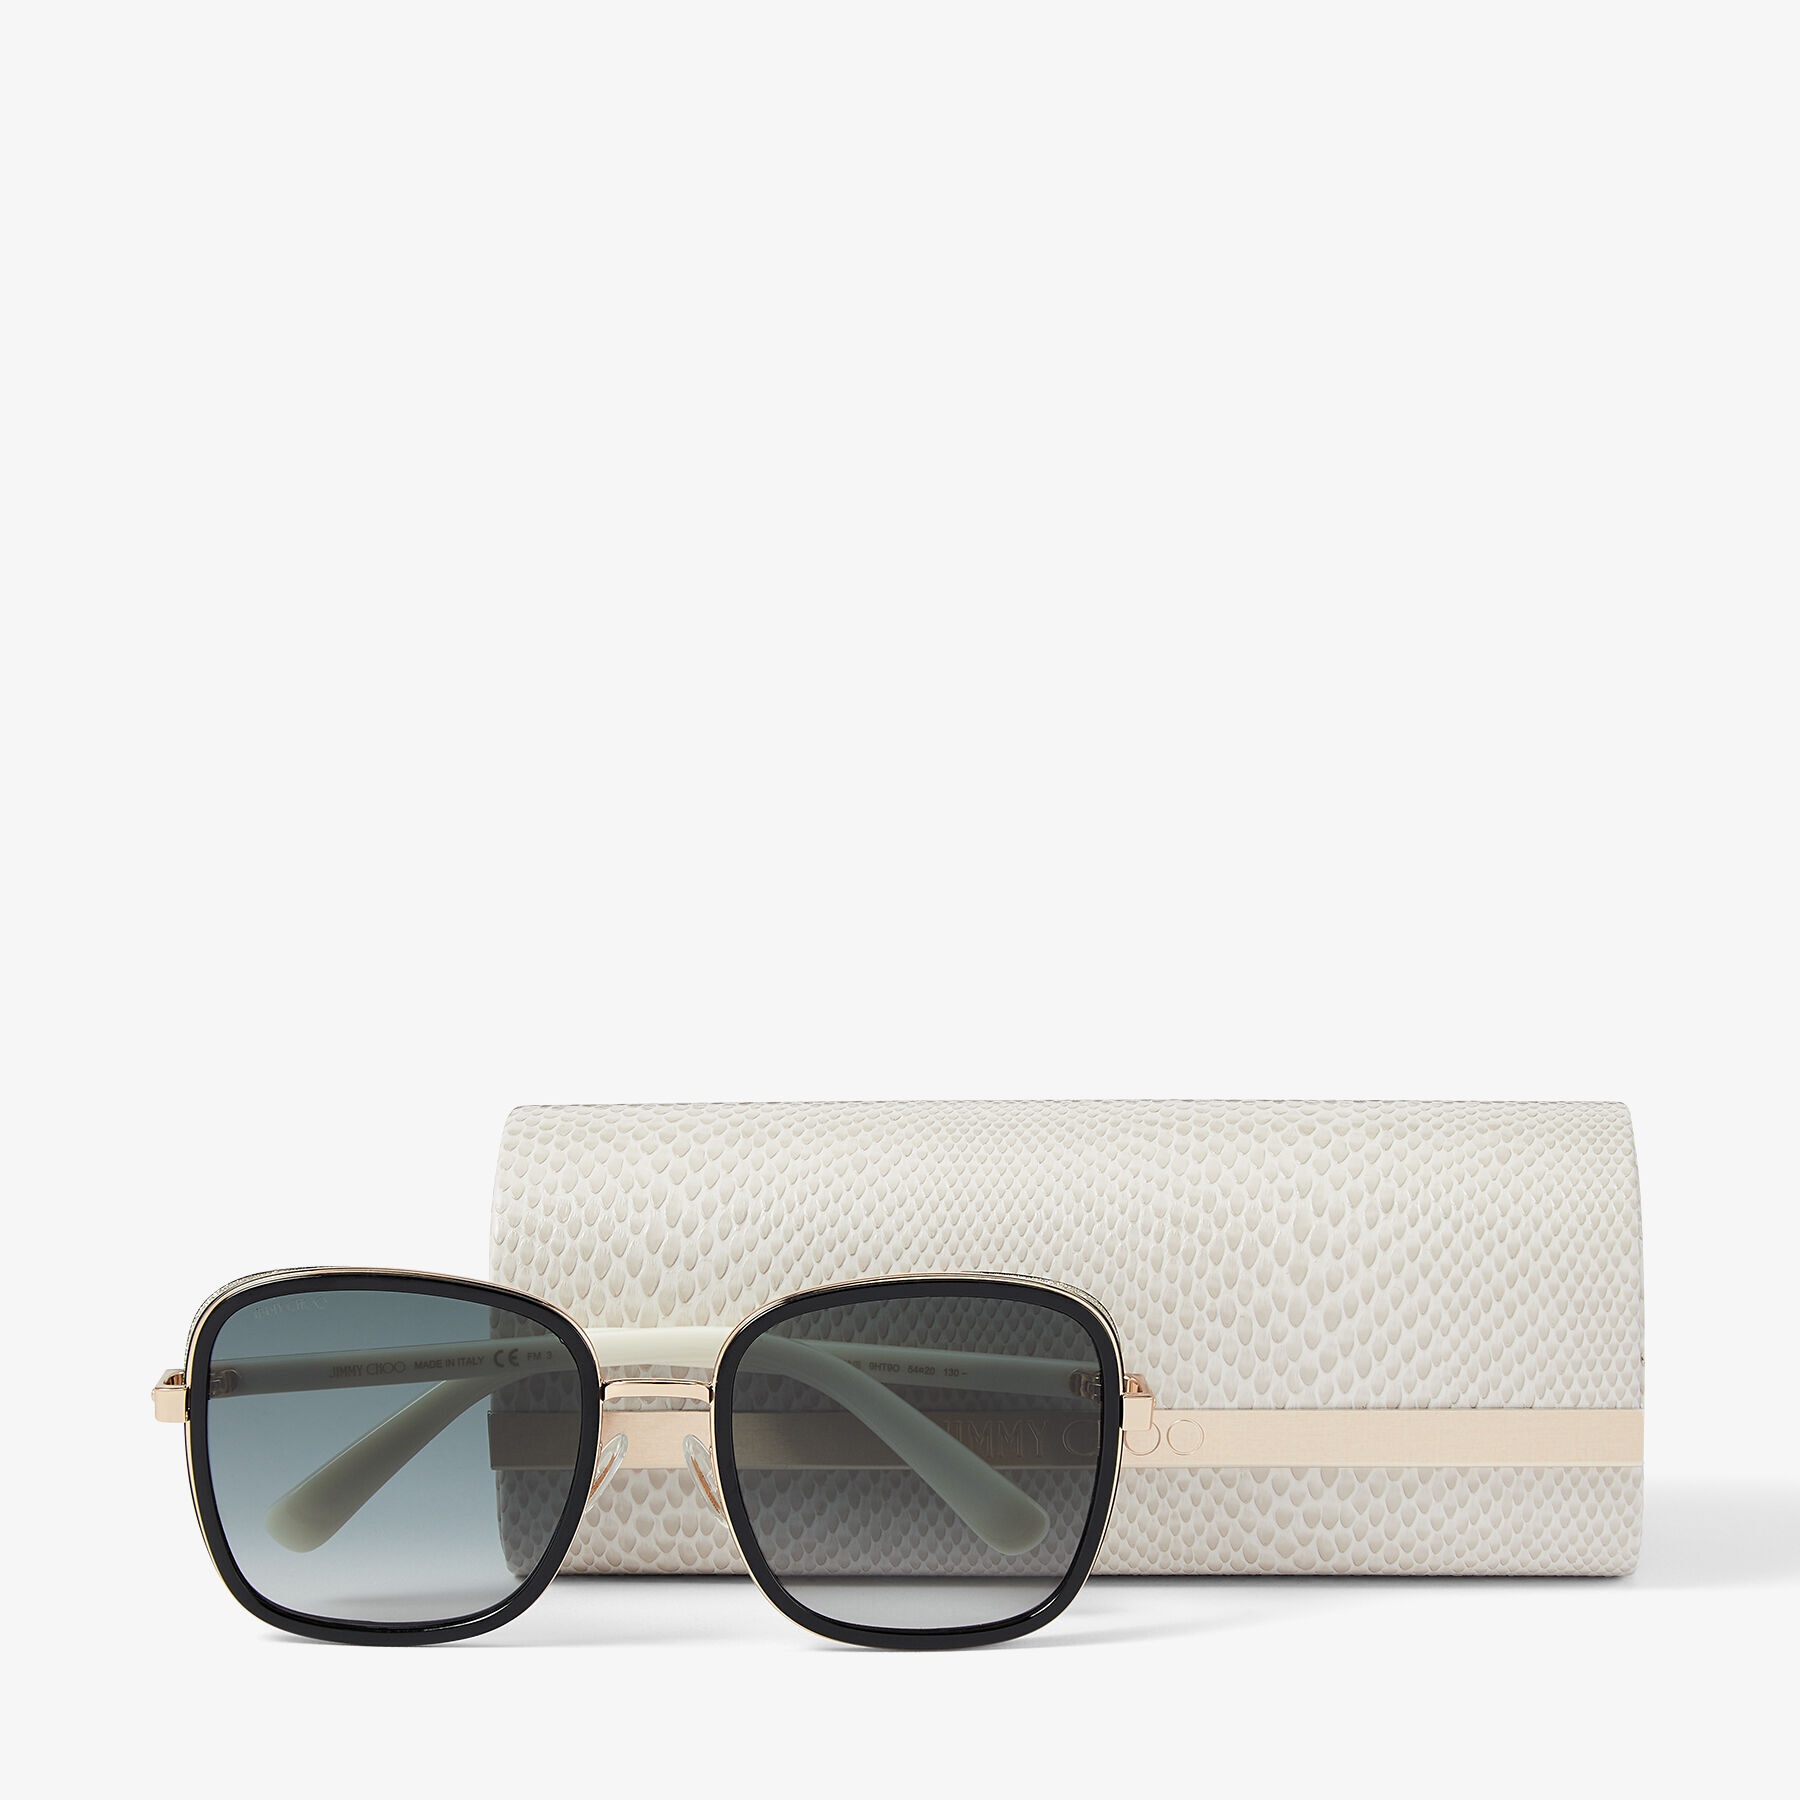 Elva
Black Square-Frame Sunglasses with Gold Glitter - 4